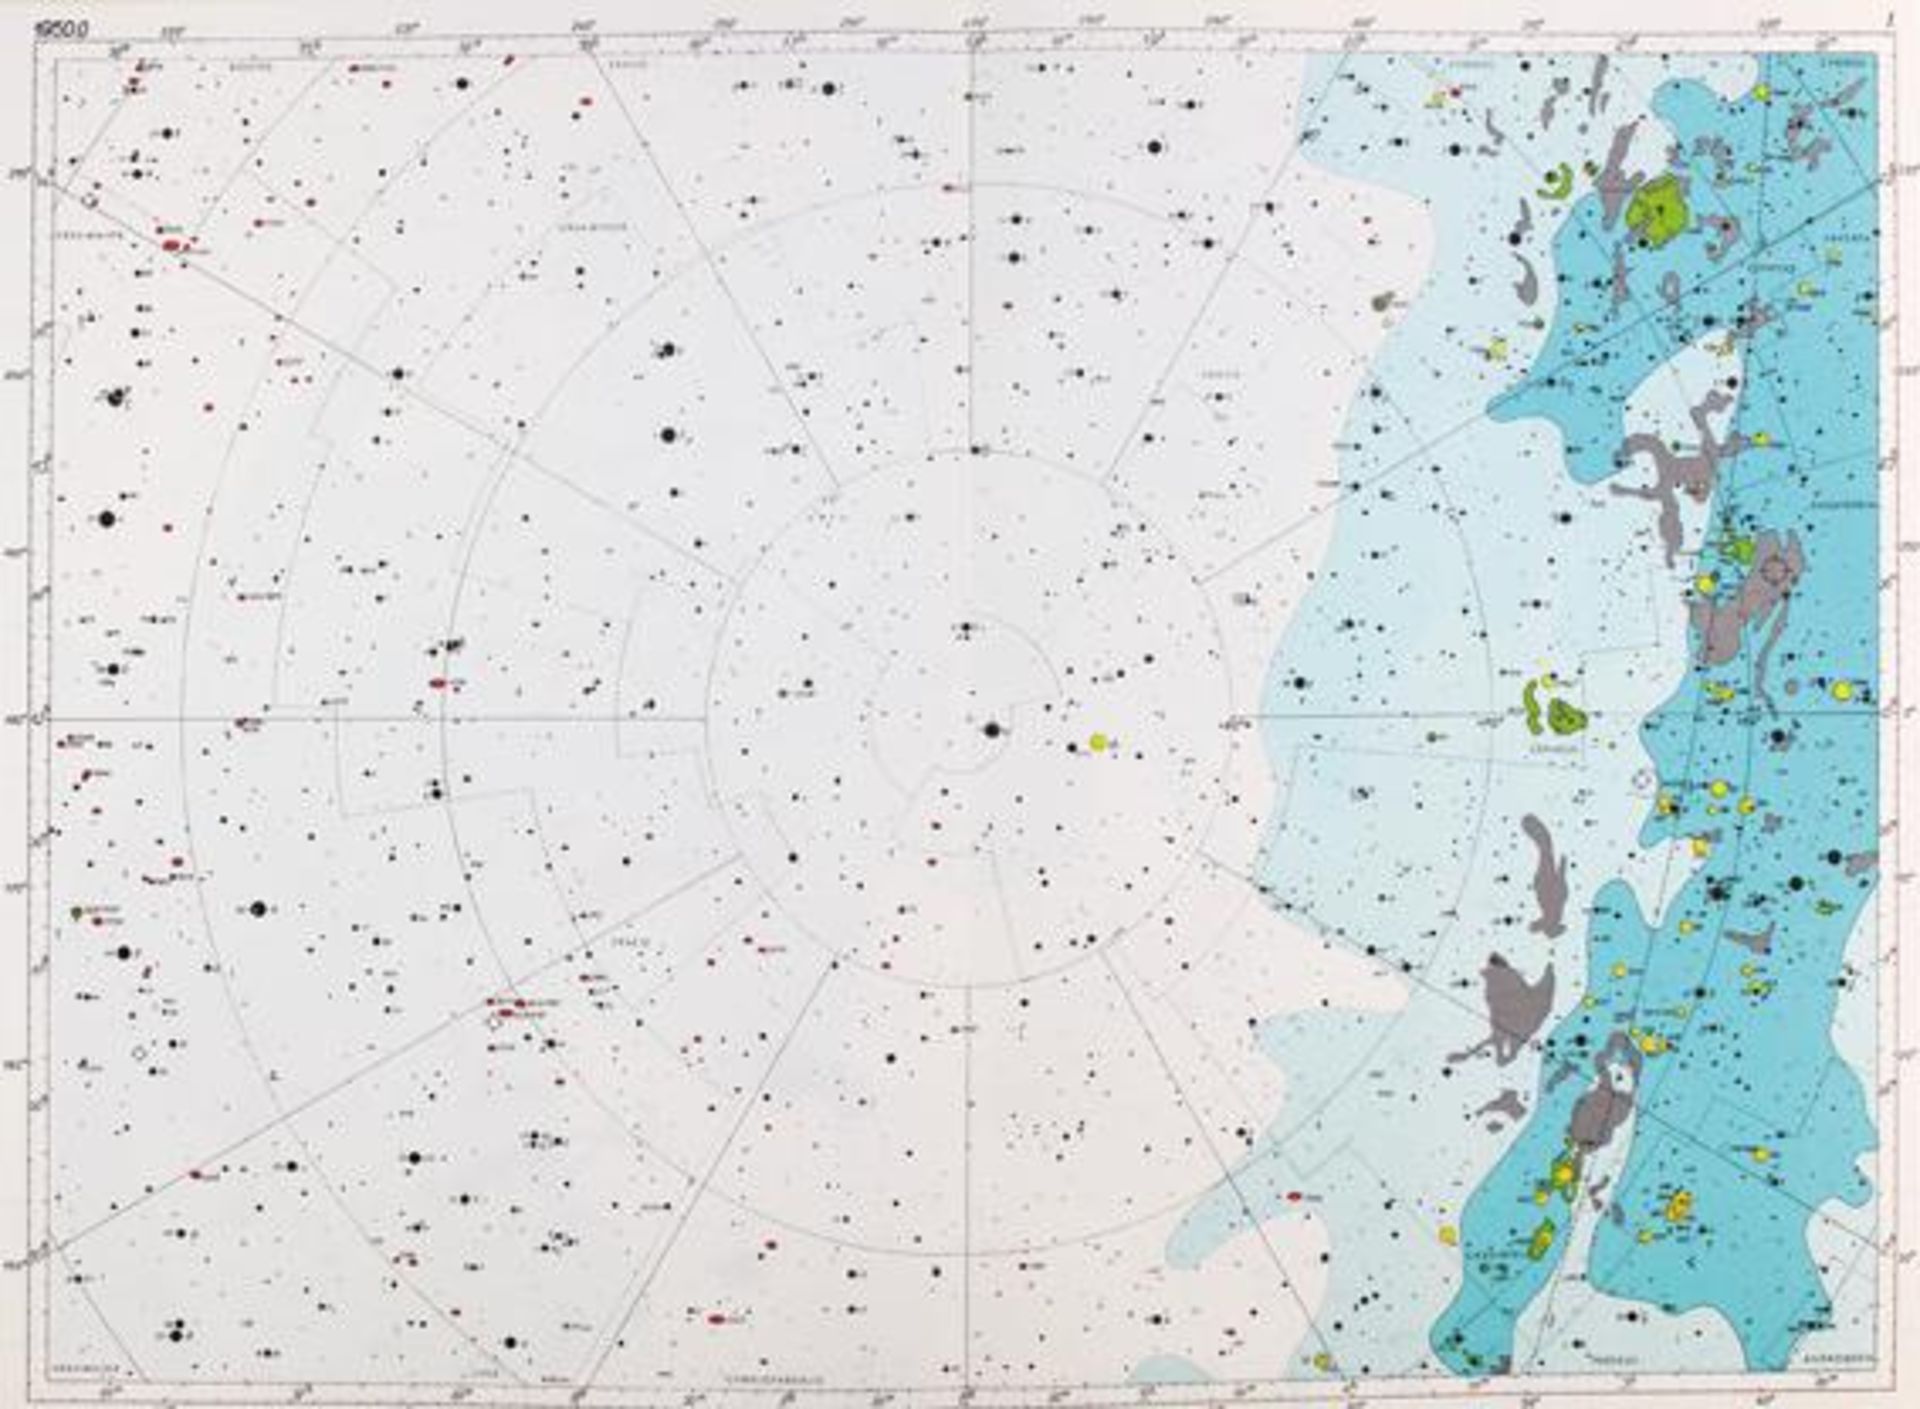 Becvar,A.Atlas of the Heavens. Atlas coeli 1950.0. Mit 16 gefalt. farb. Karten. - Atlas borealis.